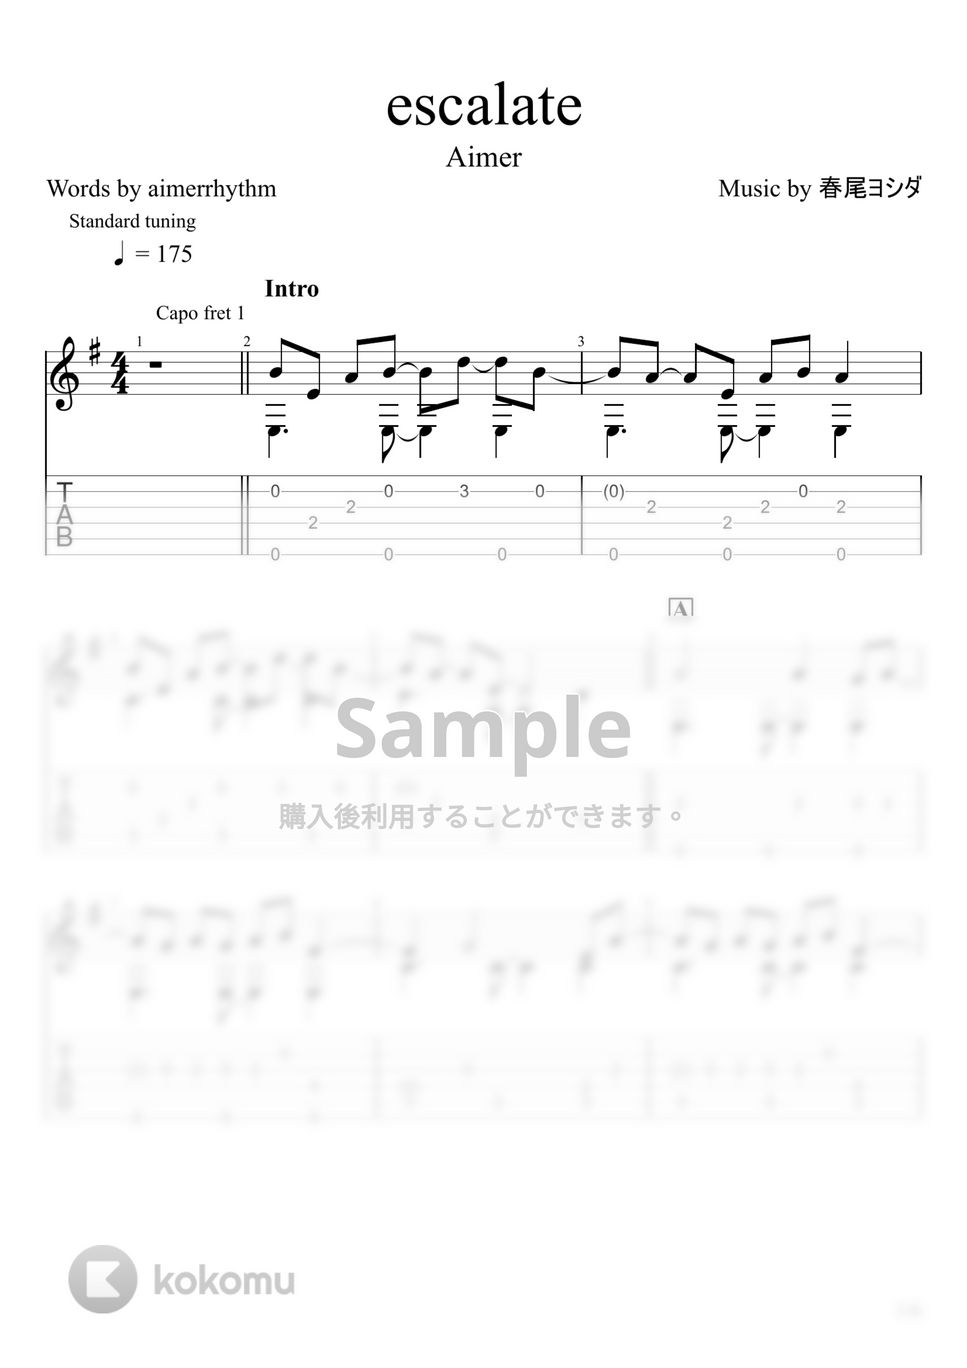 Aimer - escalate (ソロギター) by u3danchou